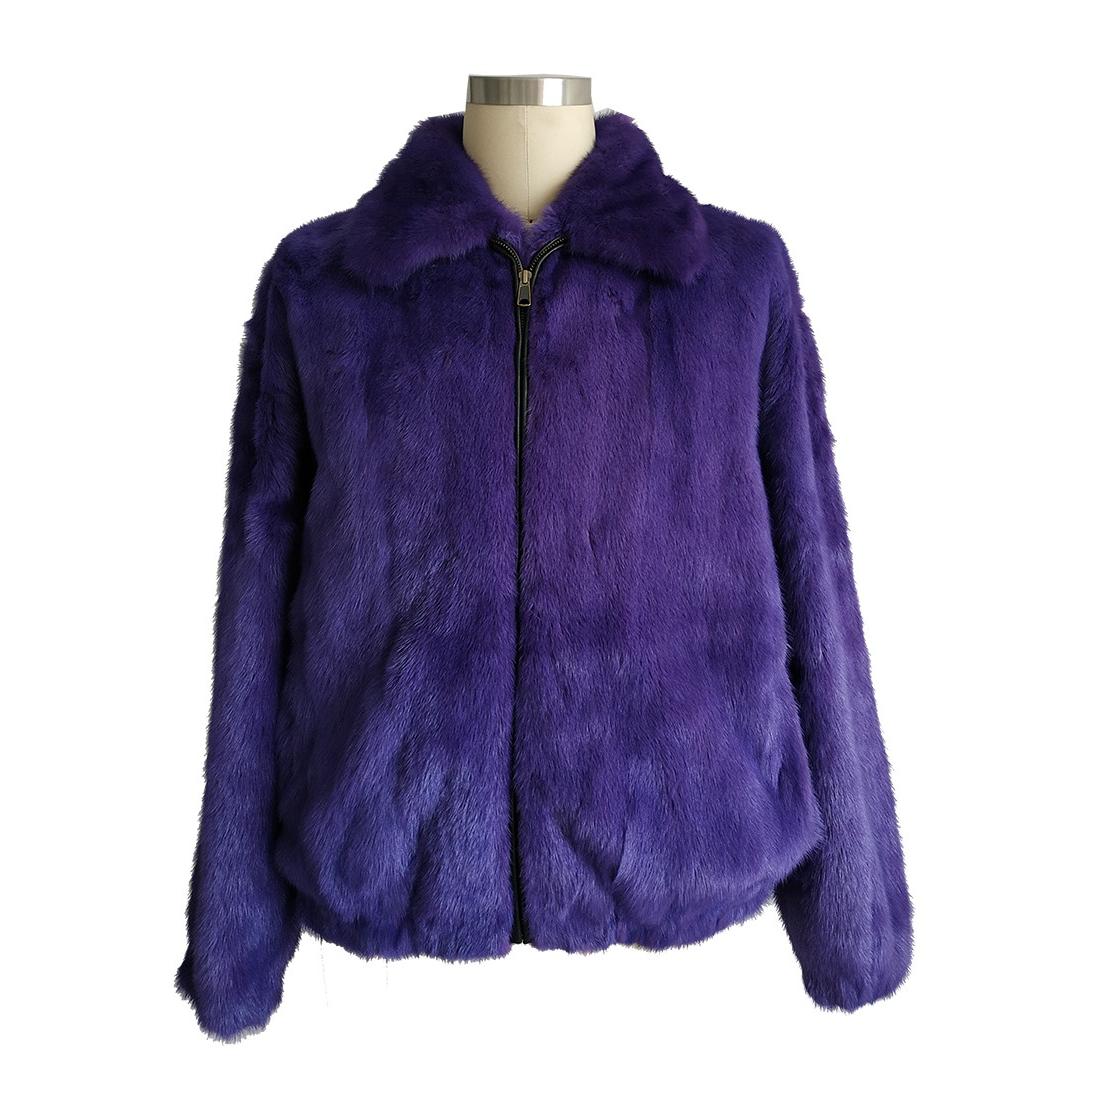 Winter Fur Purple Genuine Mink Full Skin Jacket M59RO1PP. - $3,749.90 ...